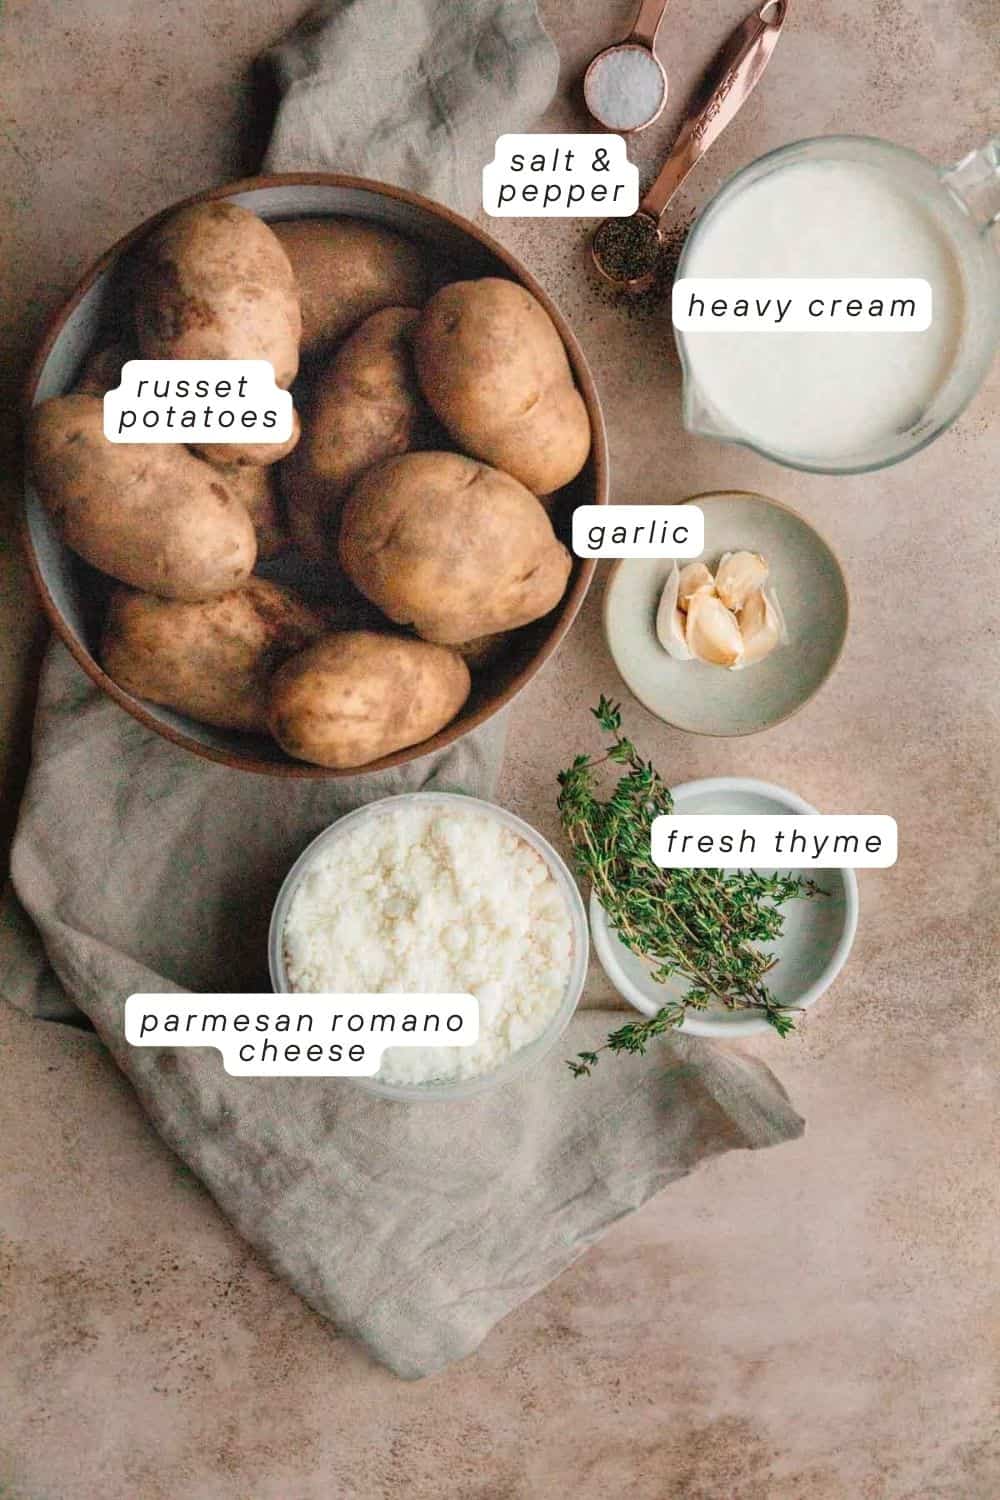 Russet potatoes, salt, pepper, heavy cream, garlic, fresh thyme, parmesan Romano cheese. 